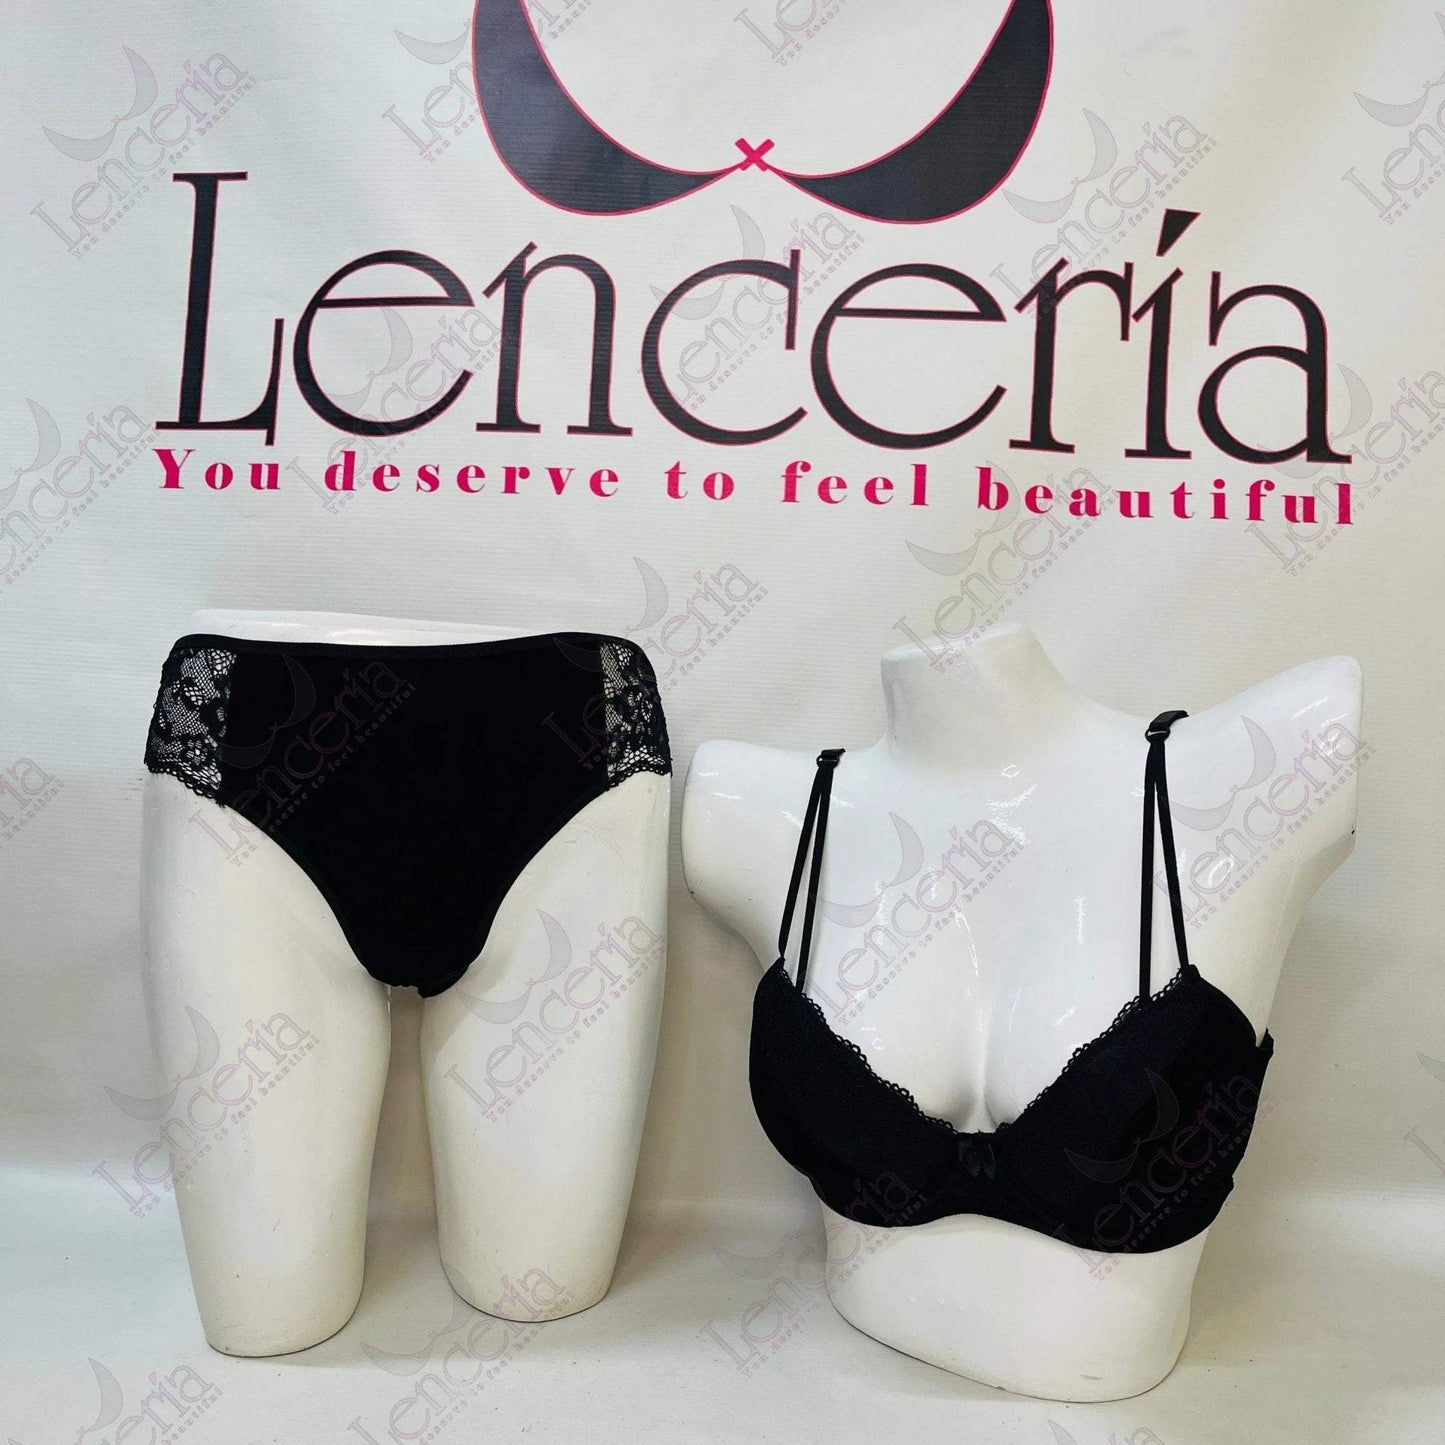 Cheriee nocte velvet & embroidered lingerie set - extremely beautiful (c73) Lenceria.pk Pakistan